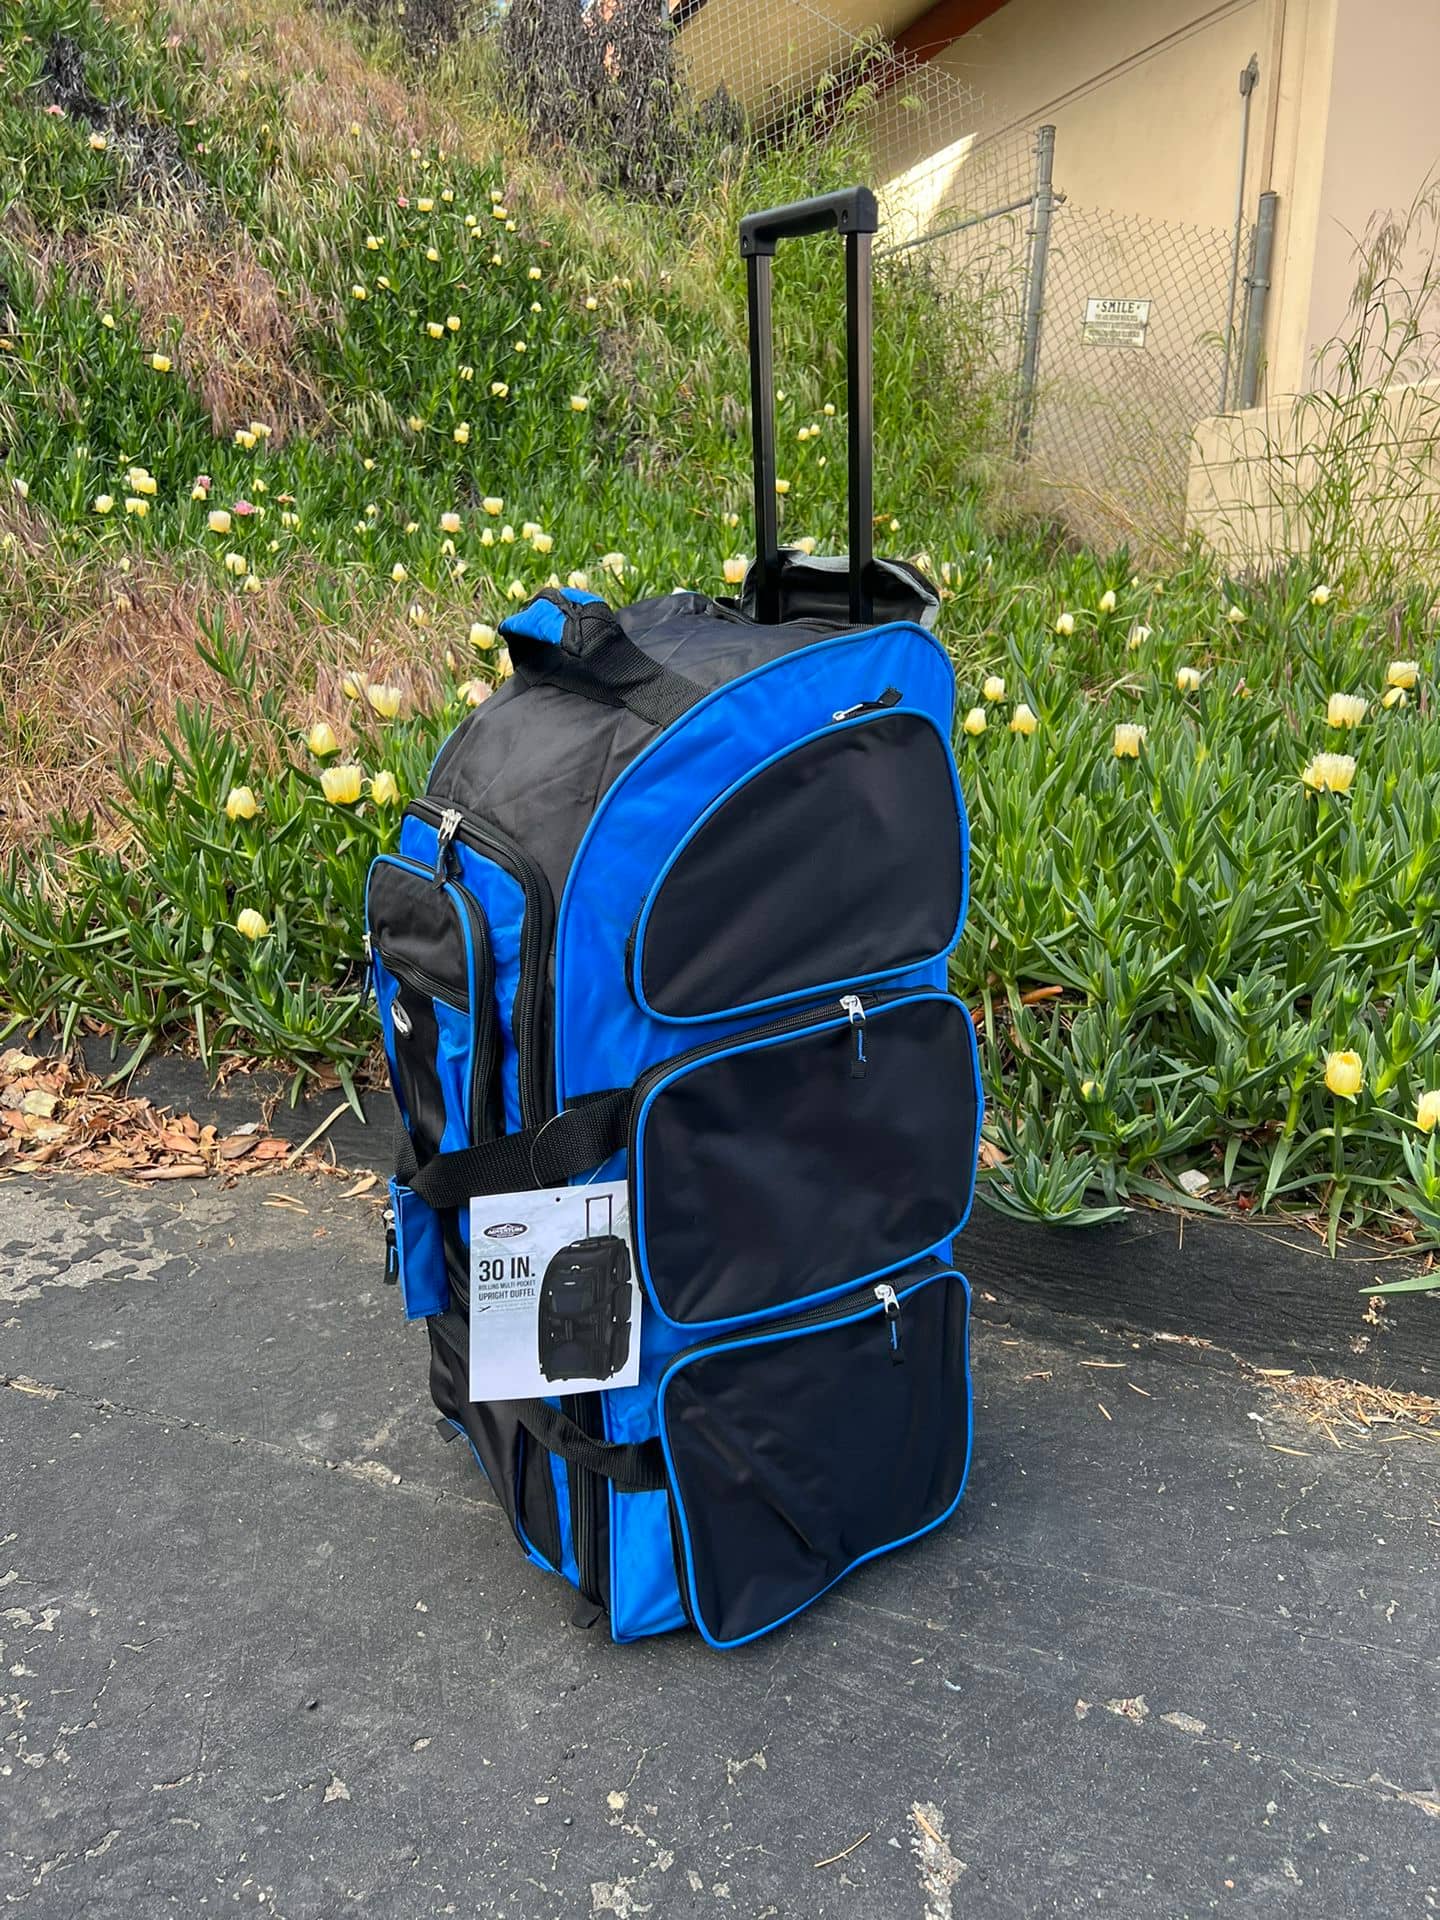 Wheeled Duffel Bag, Large Wheeled Bag